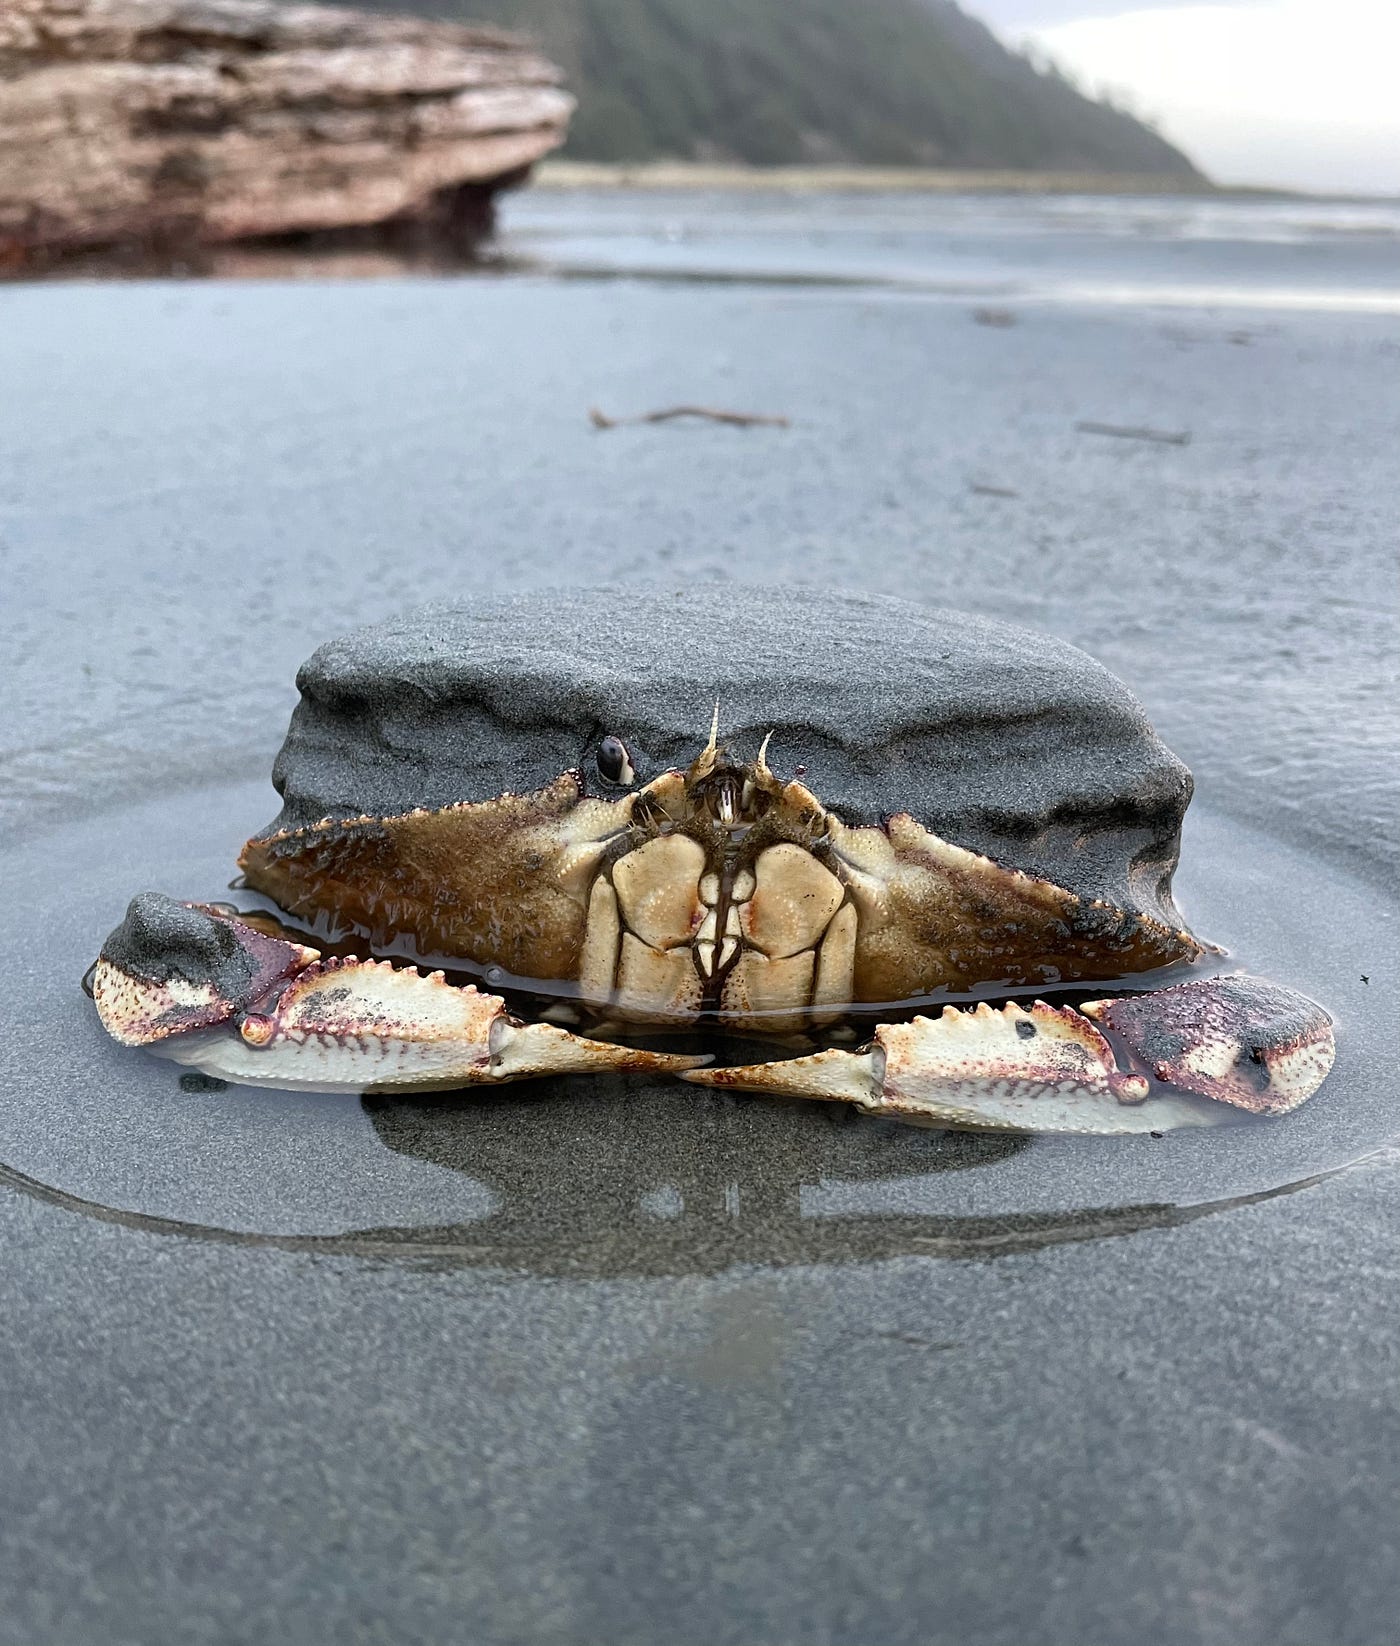 WDFW establishes Coastal Recreational Crab Unit; improves